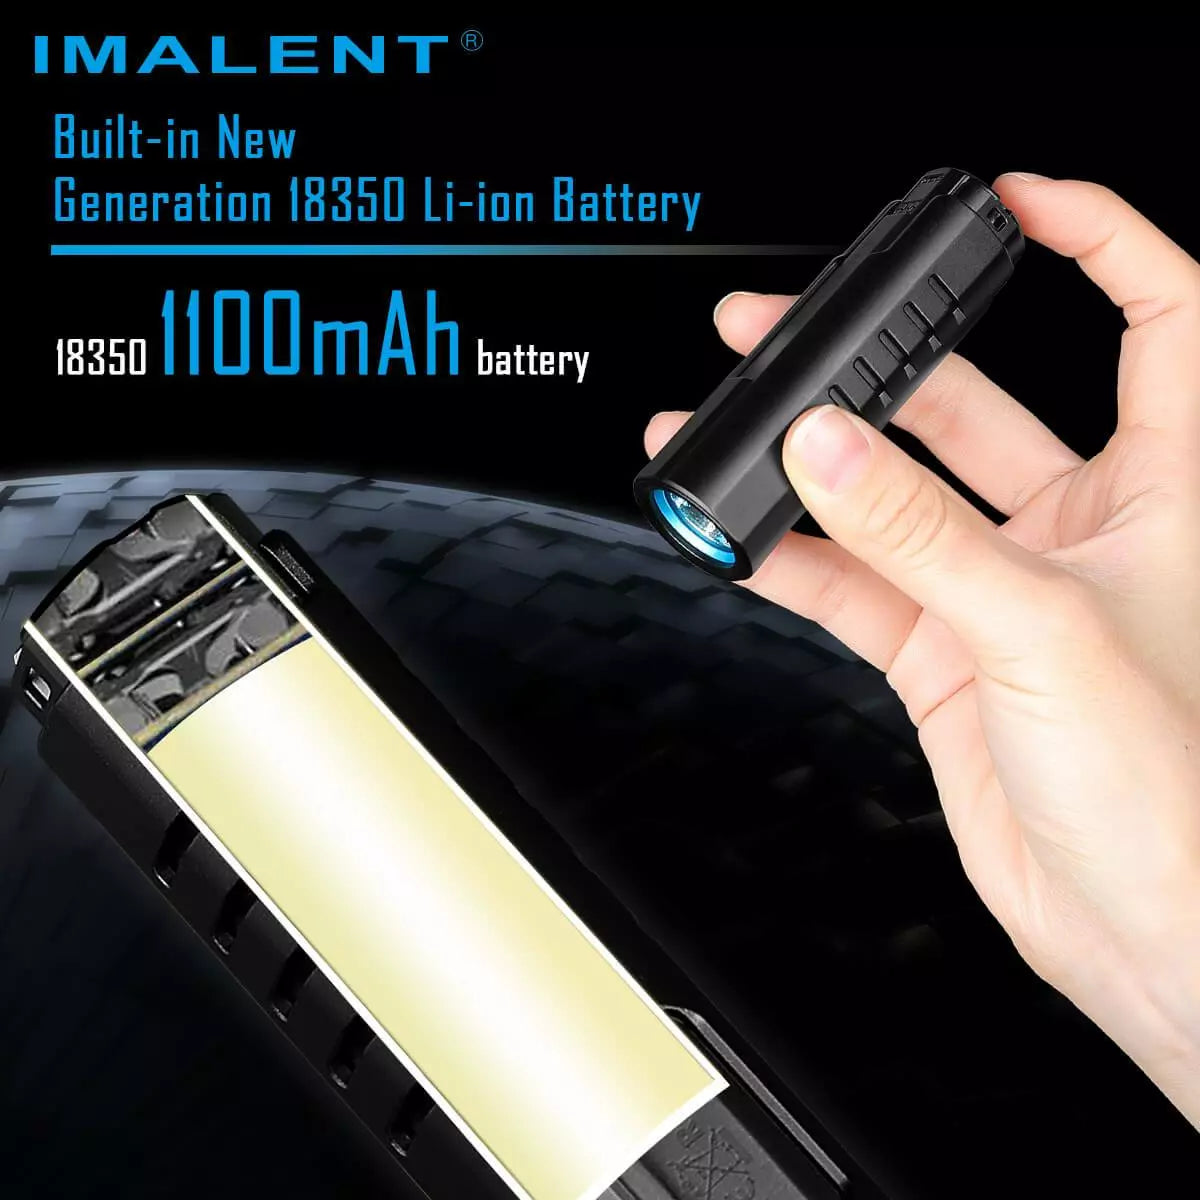 Imalent LD70 4000 Lumen Compact Rechargeable Torch - Black